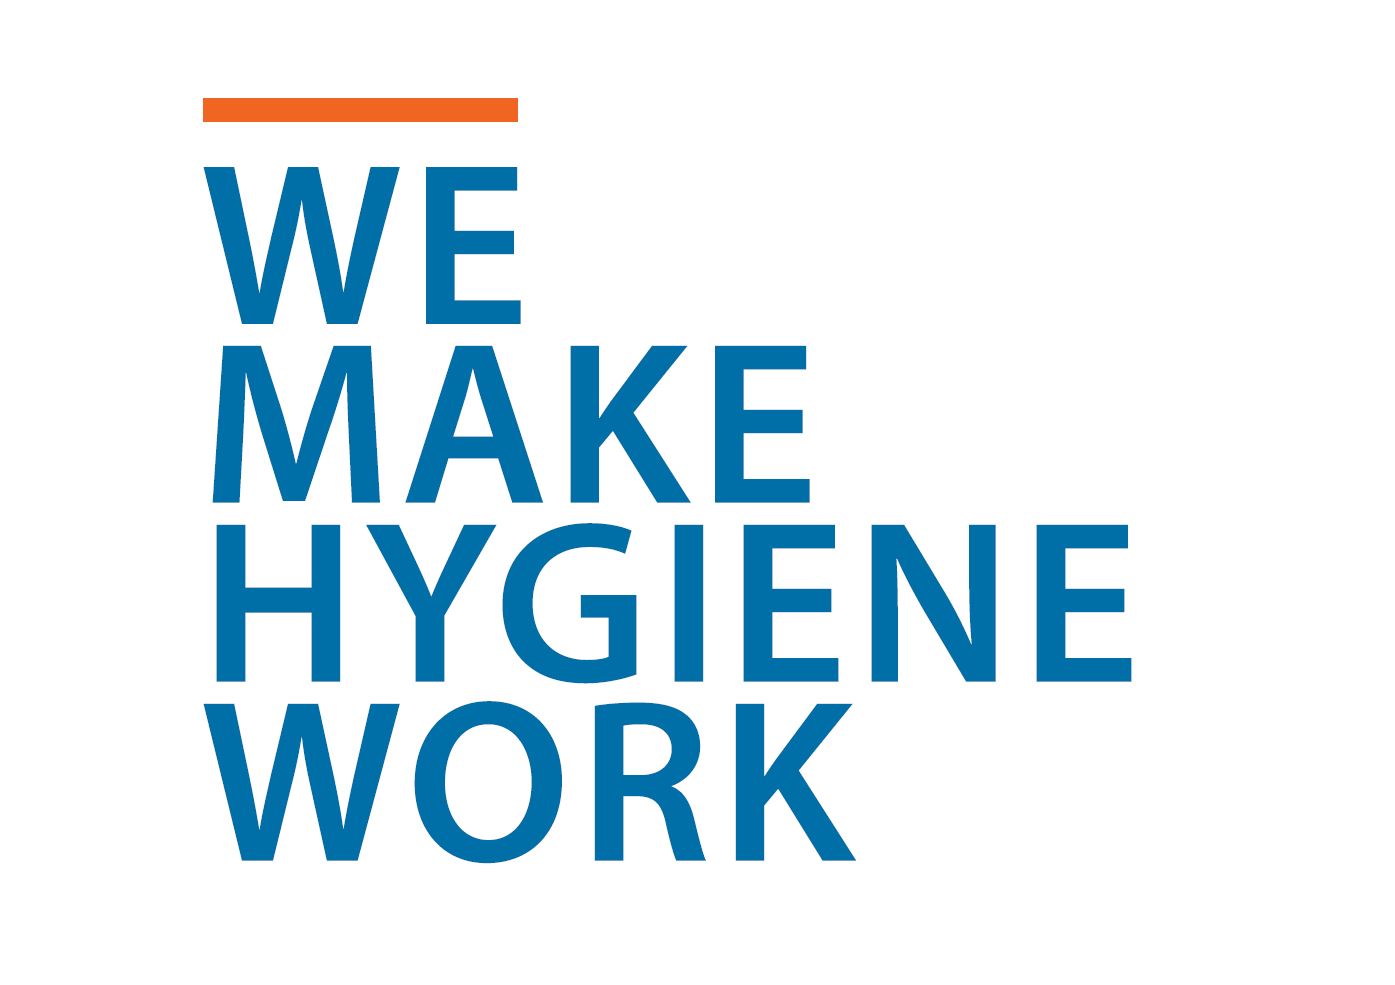 We make hygiene work